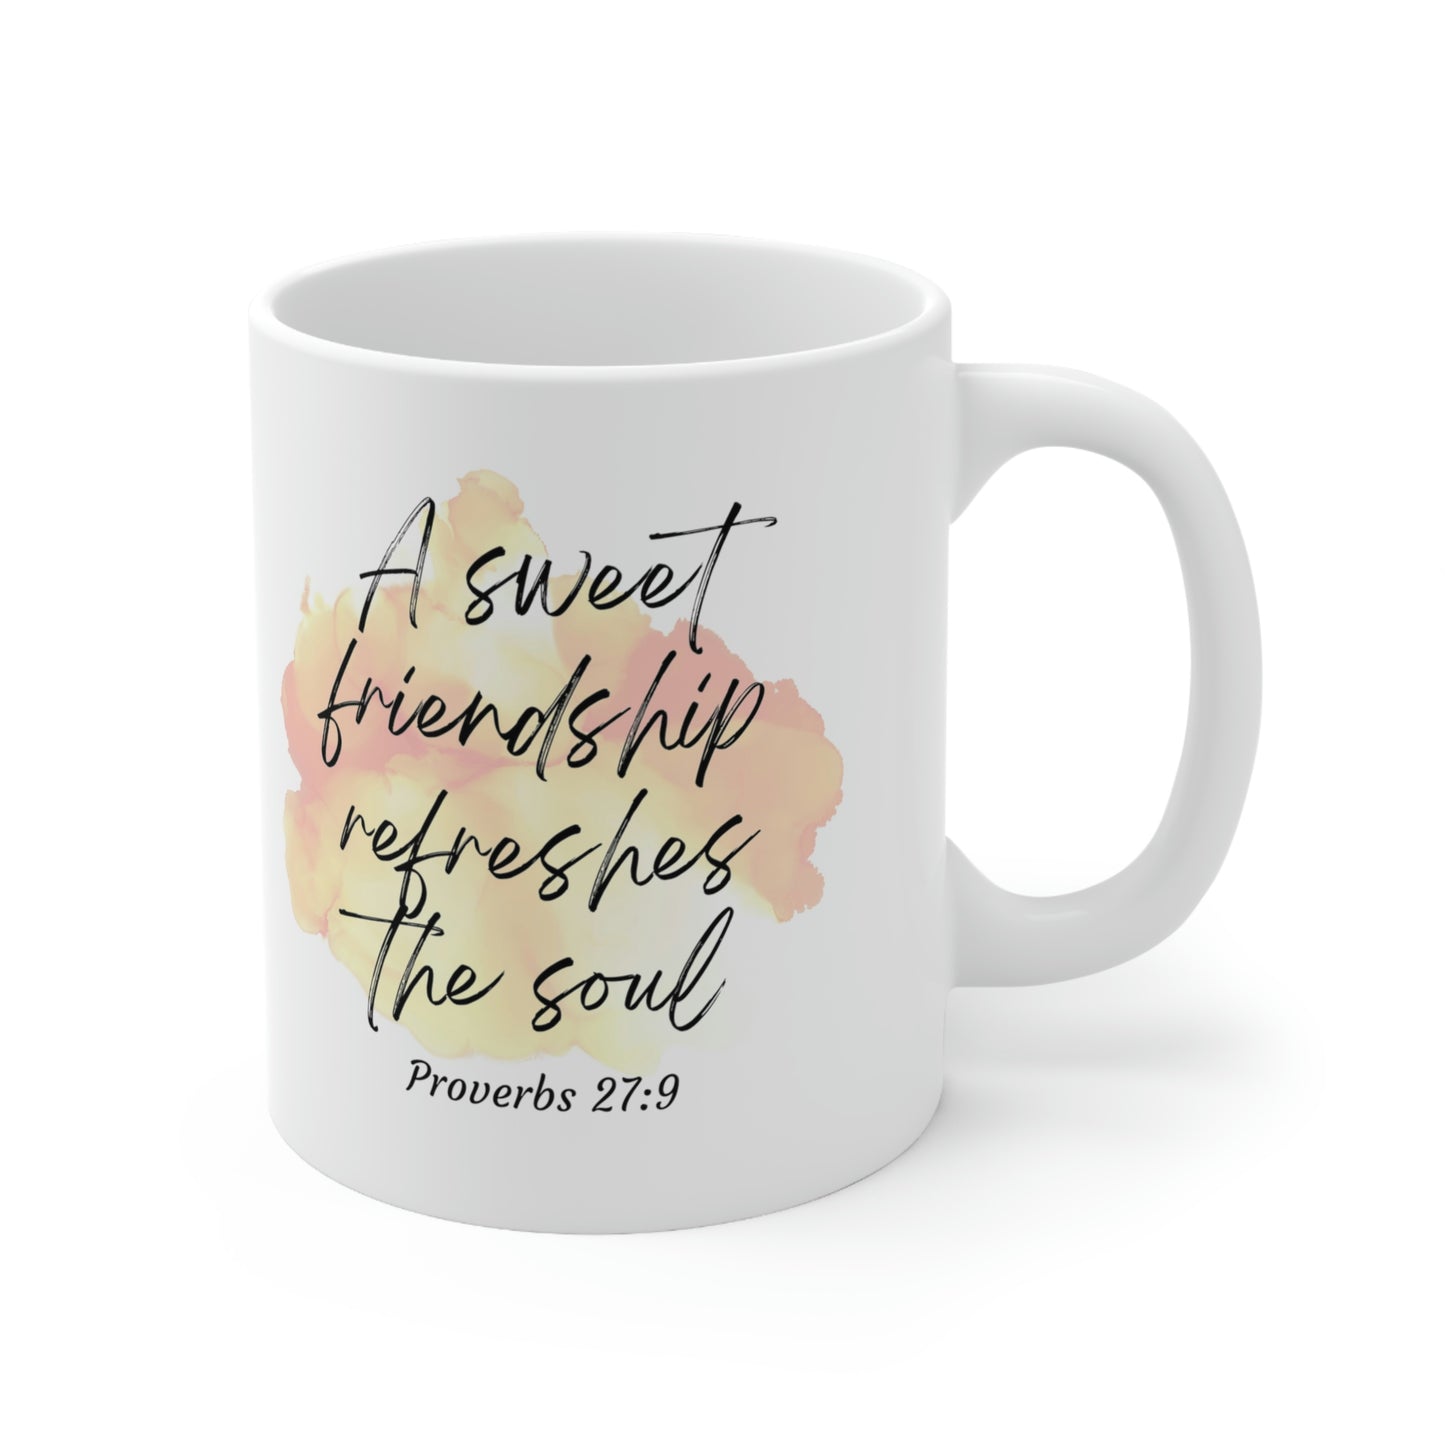 A sweet friendship refreshes the soul mug